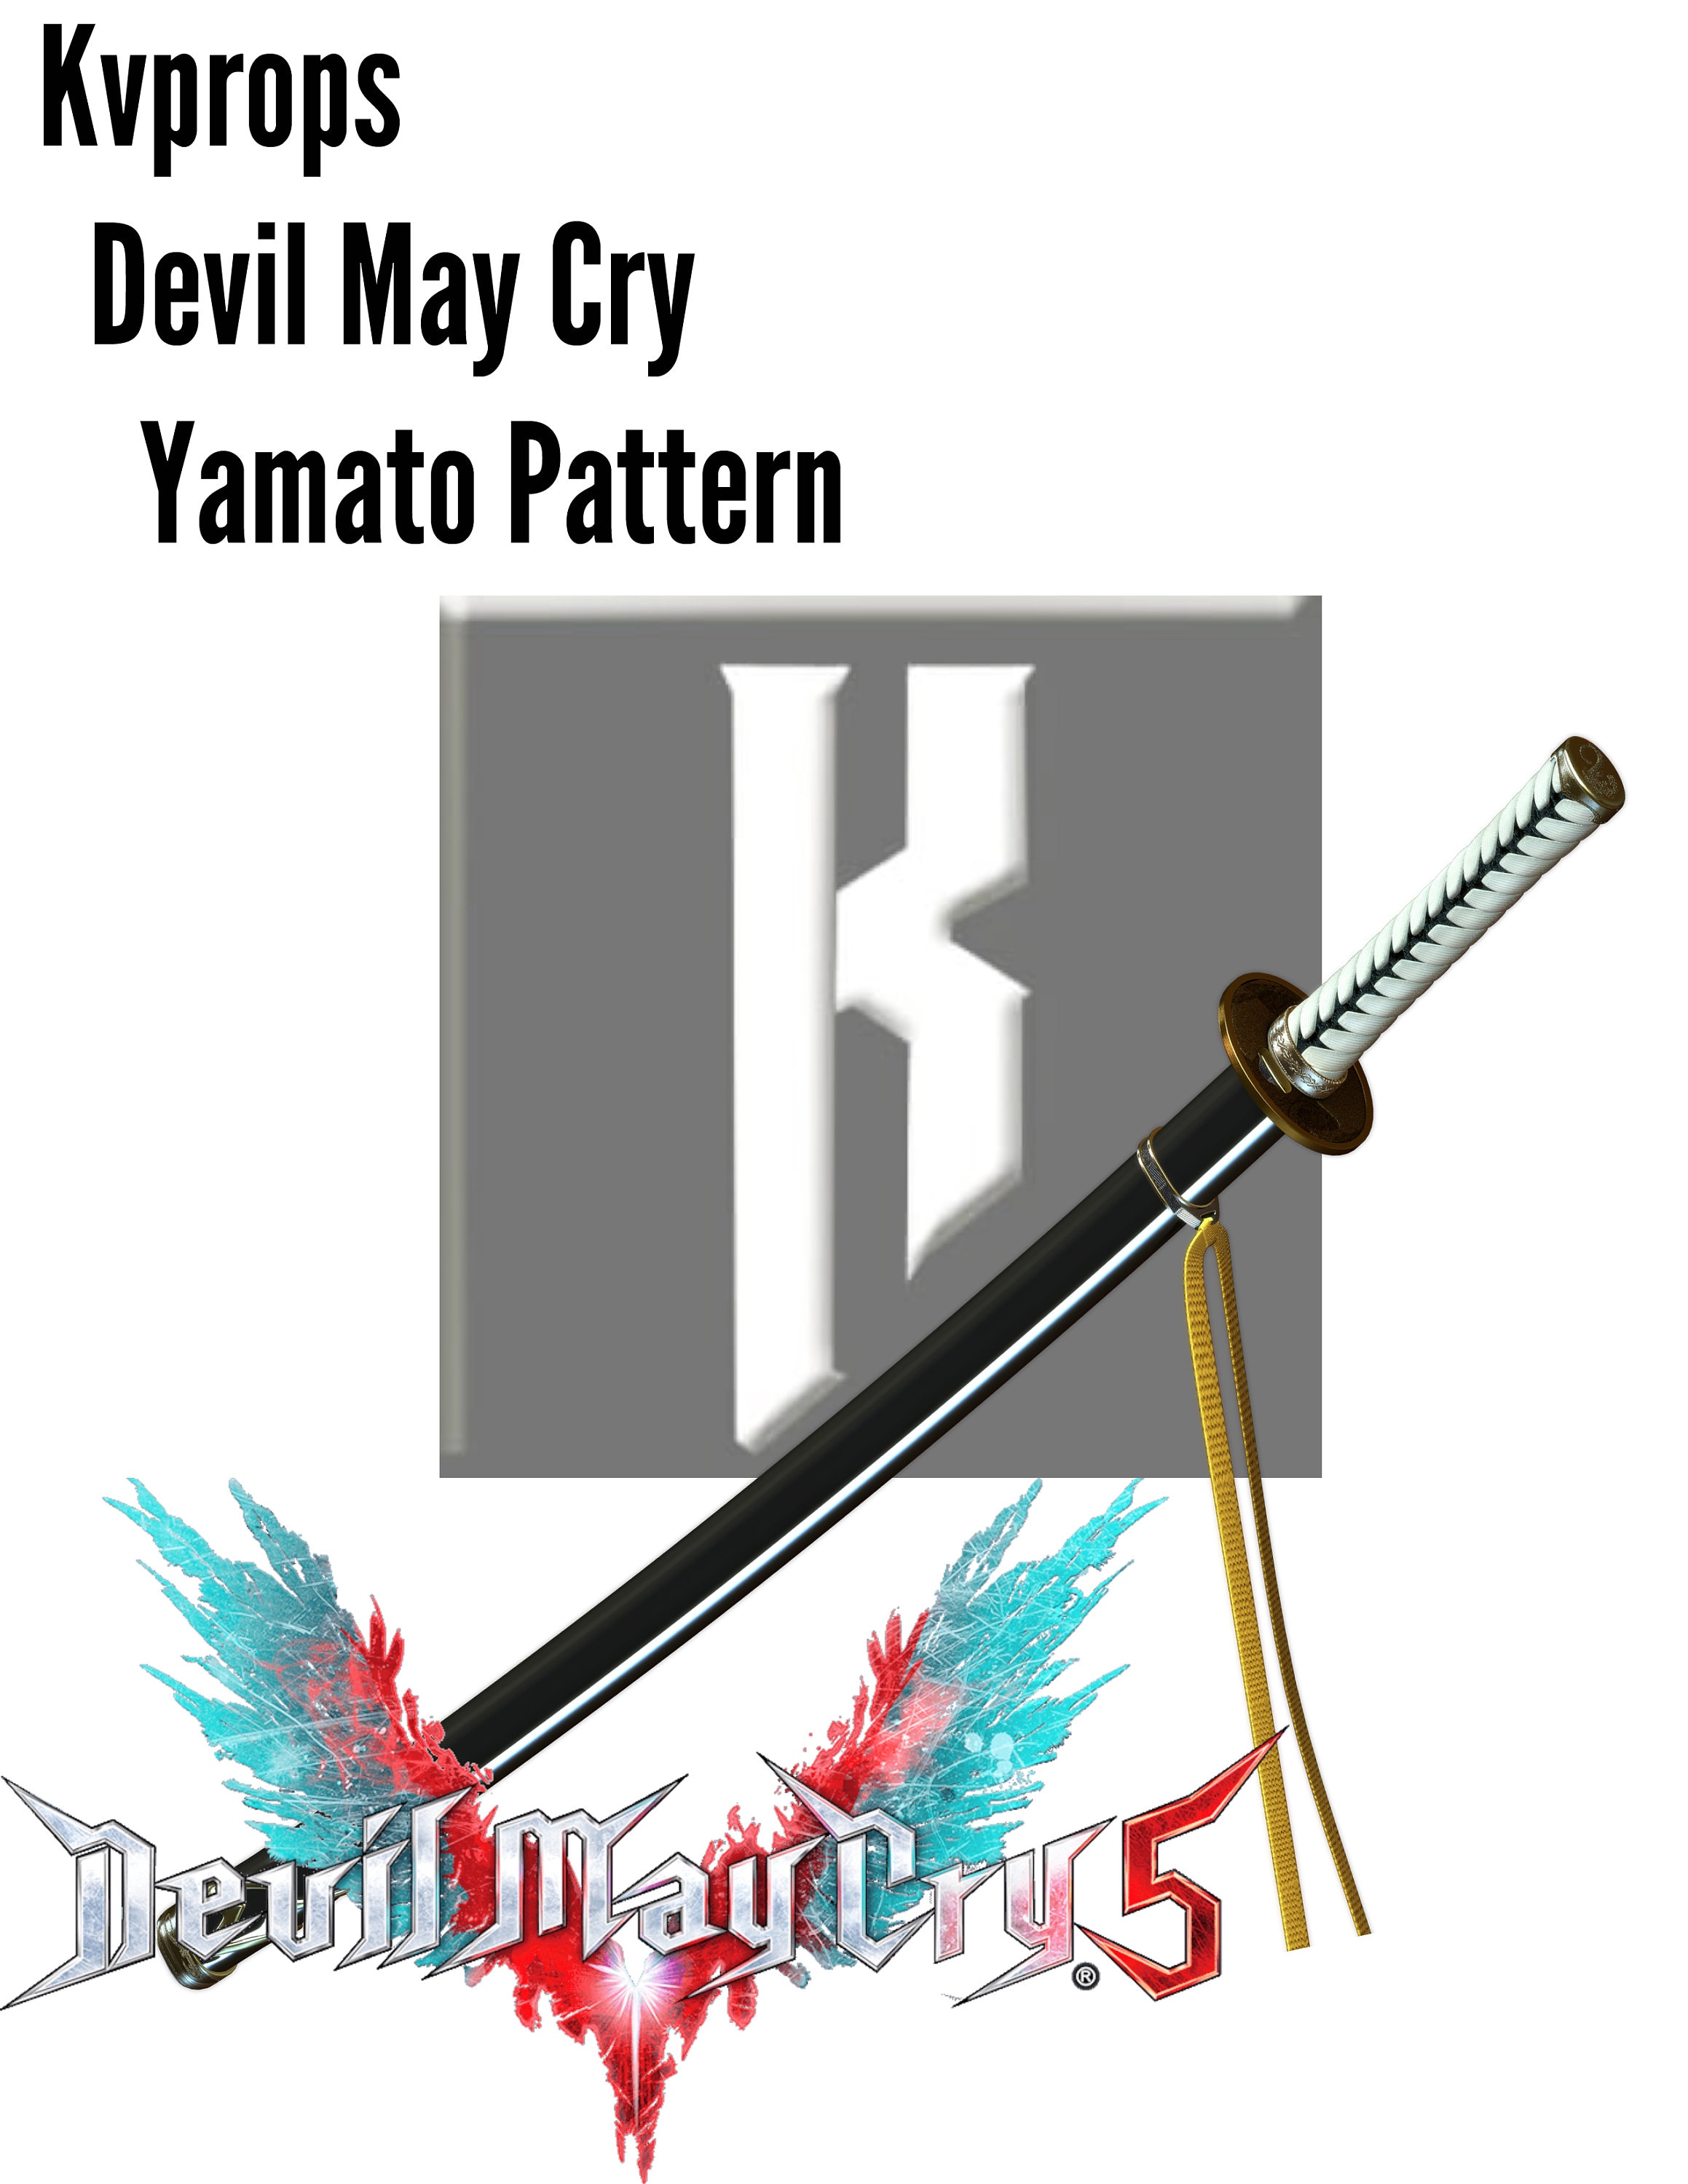 DEVIL MAY CRY 5 - Katana of Vergil - Yamato v2 - DMC 5 Version 